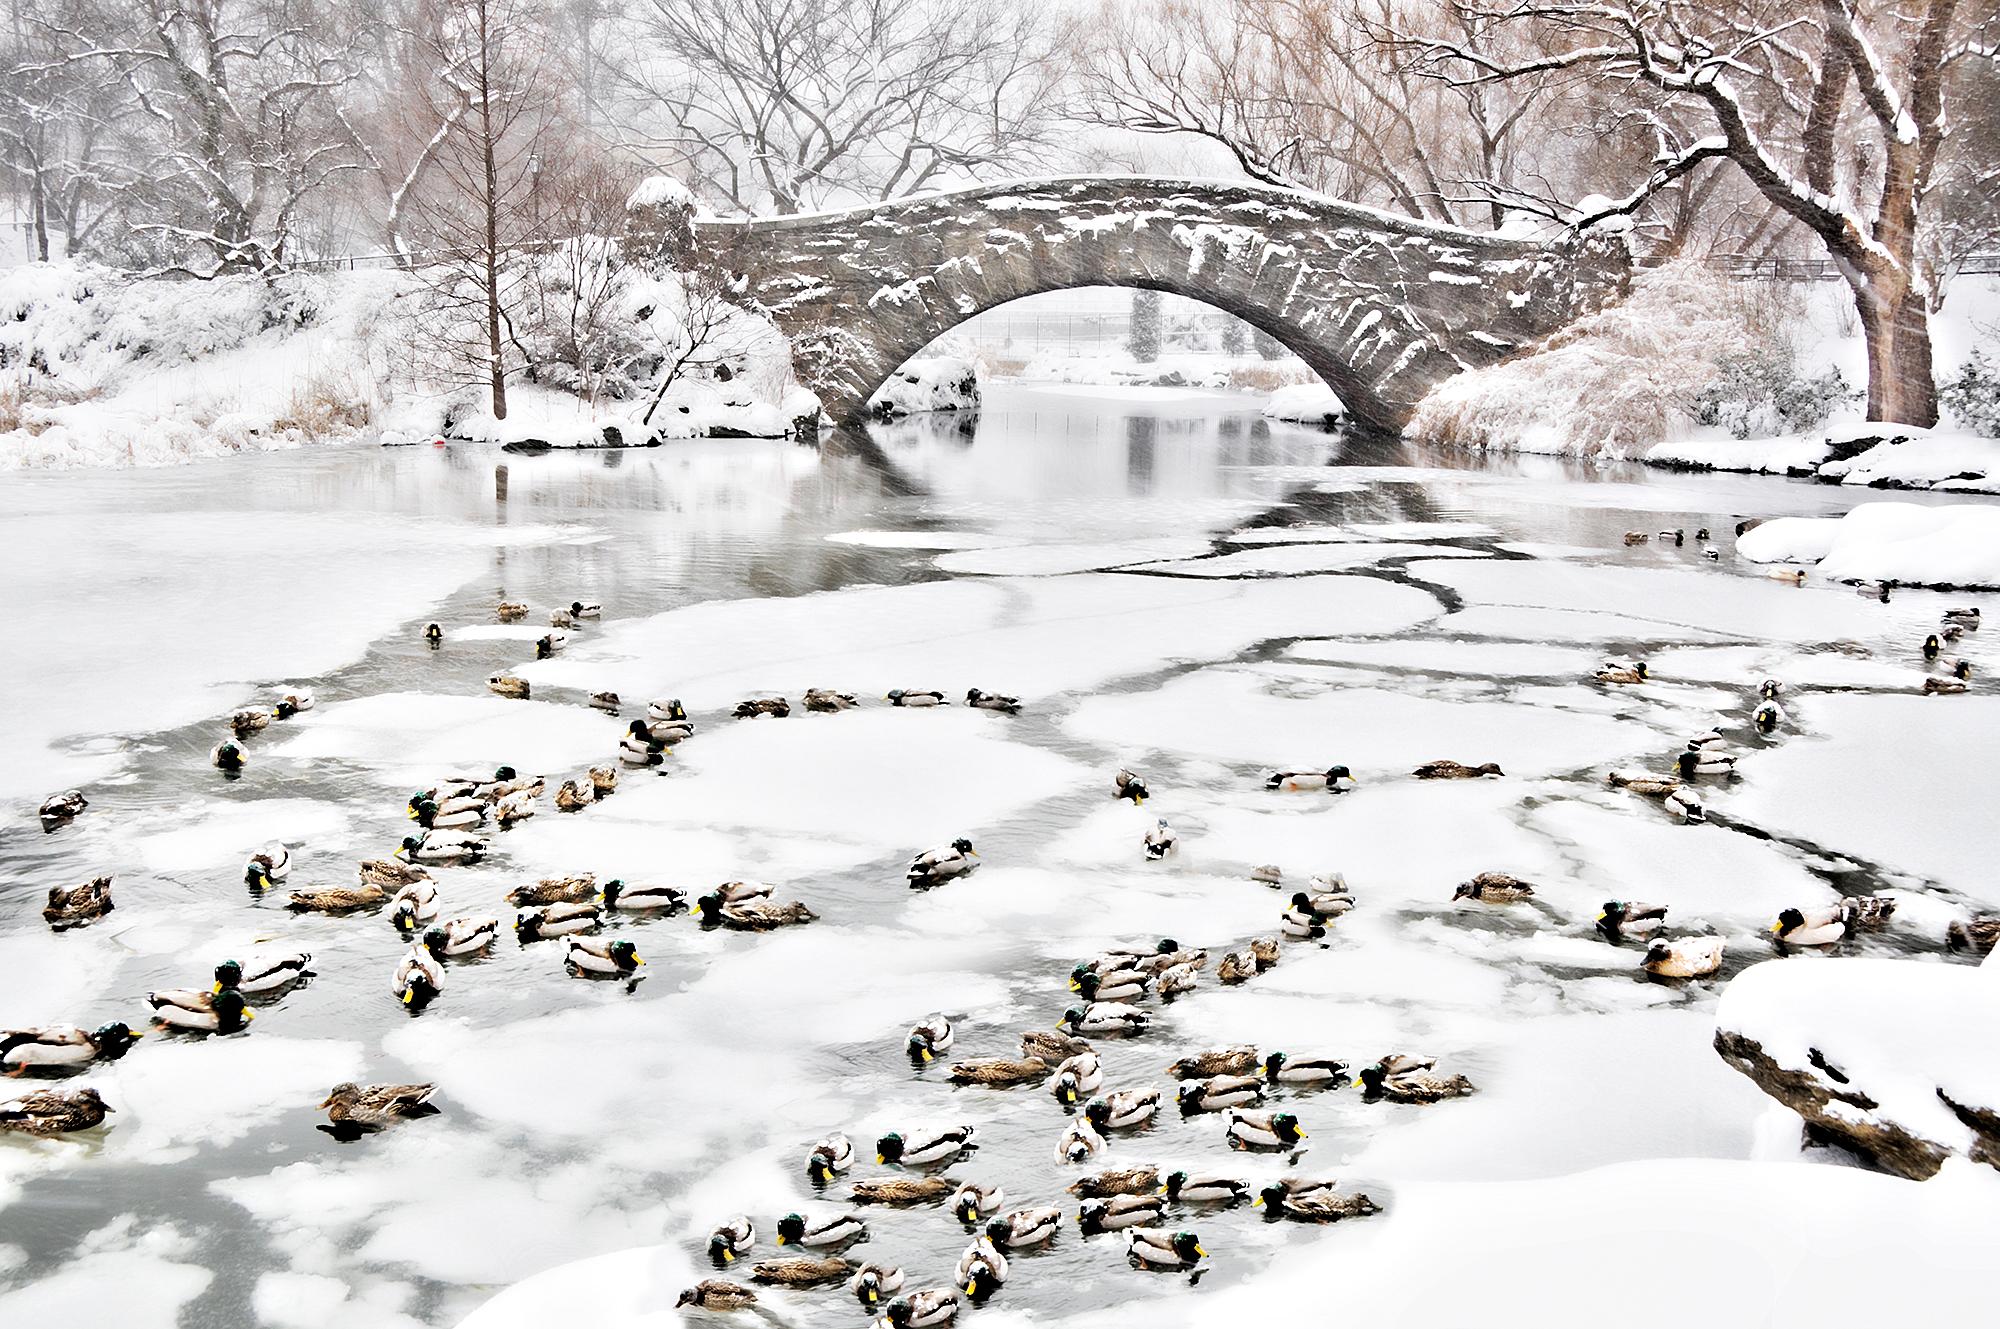 Ducks In Frozen Pond In Snowy Central Park, New York City